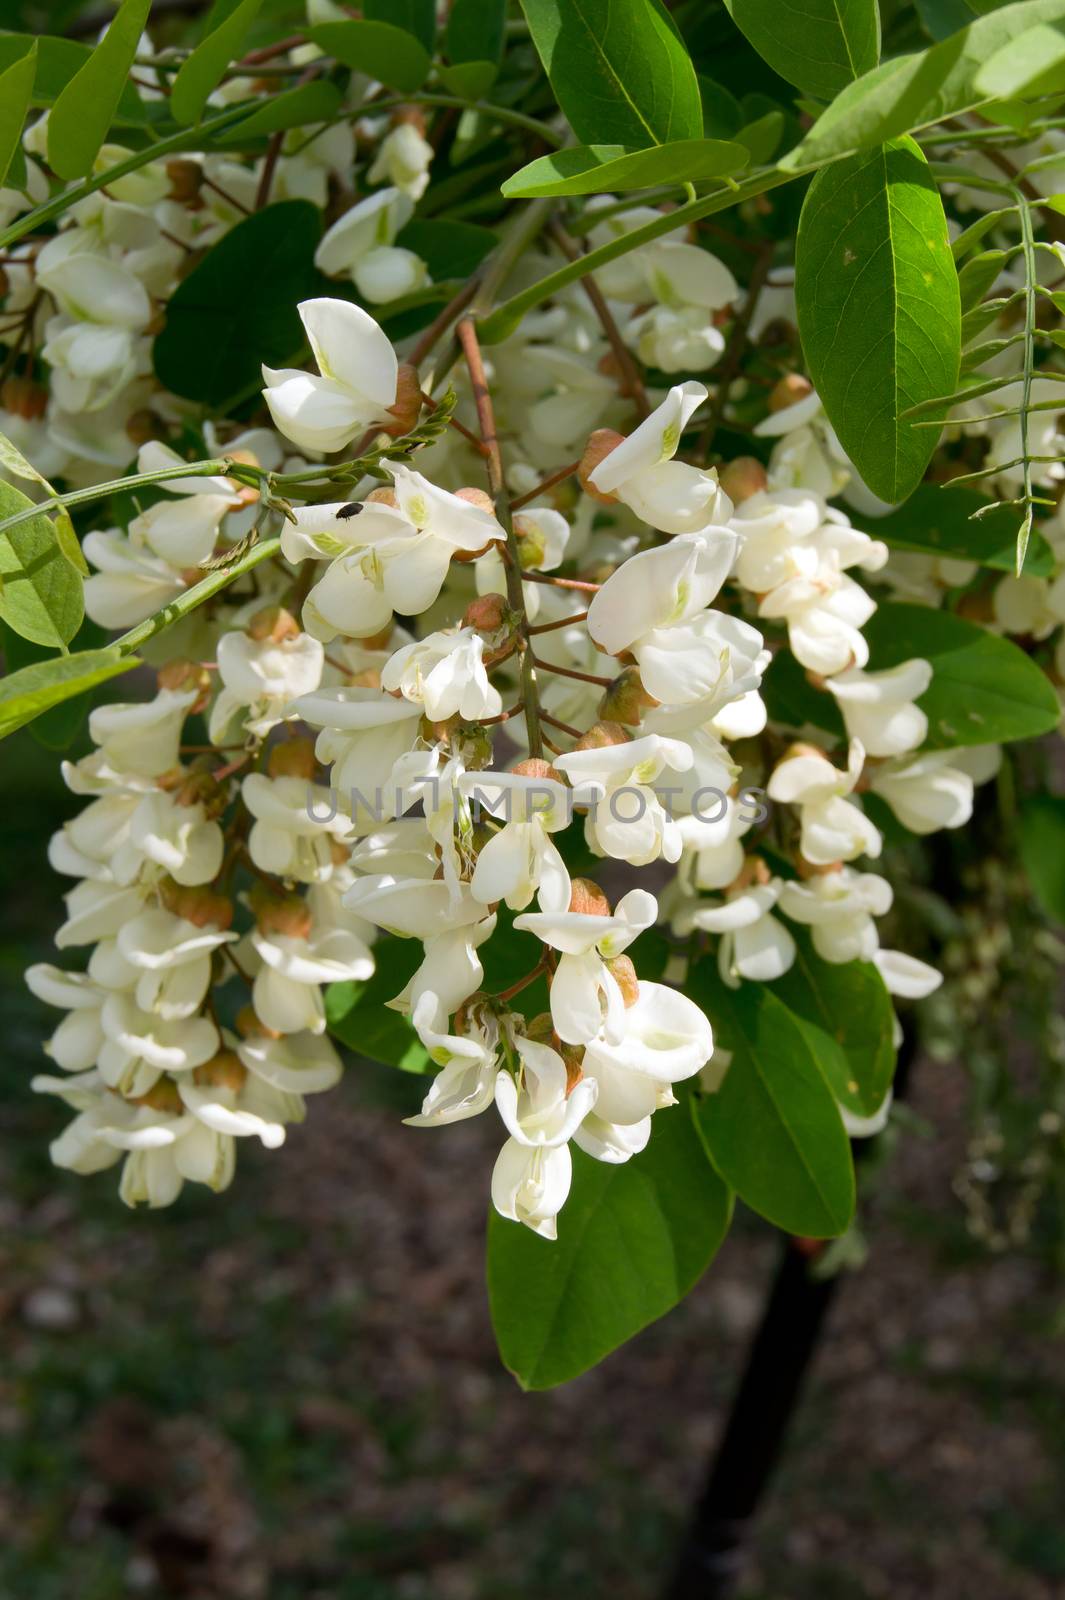 The black locust (Robinia pseudoacacia) flower edible and medicinal properties.